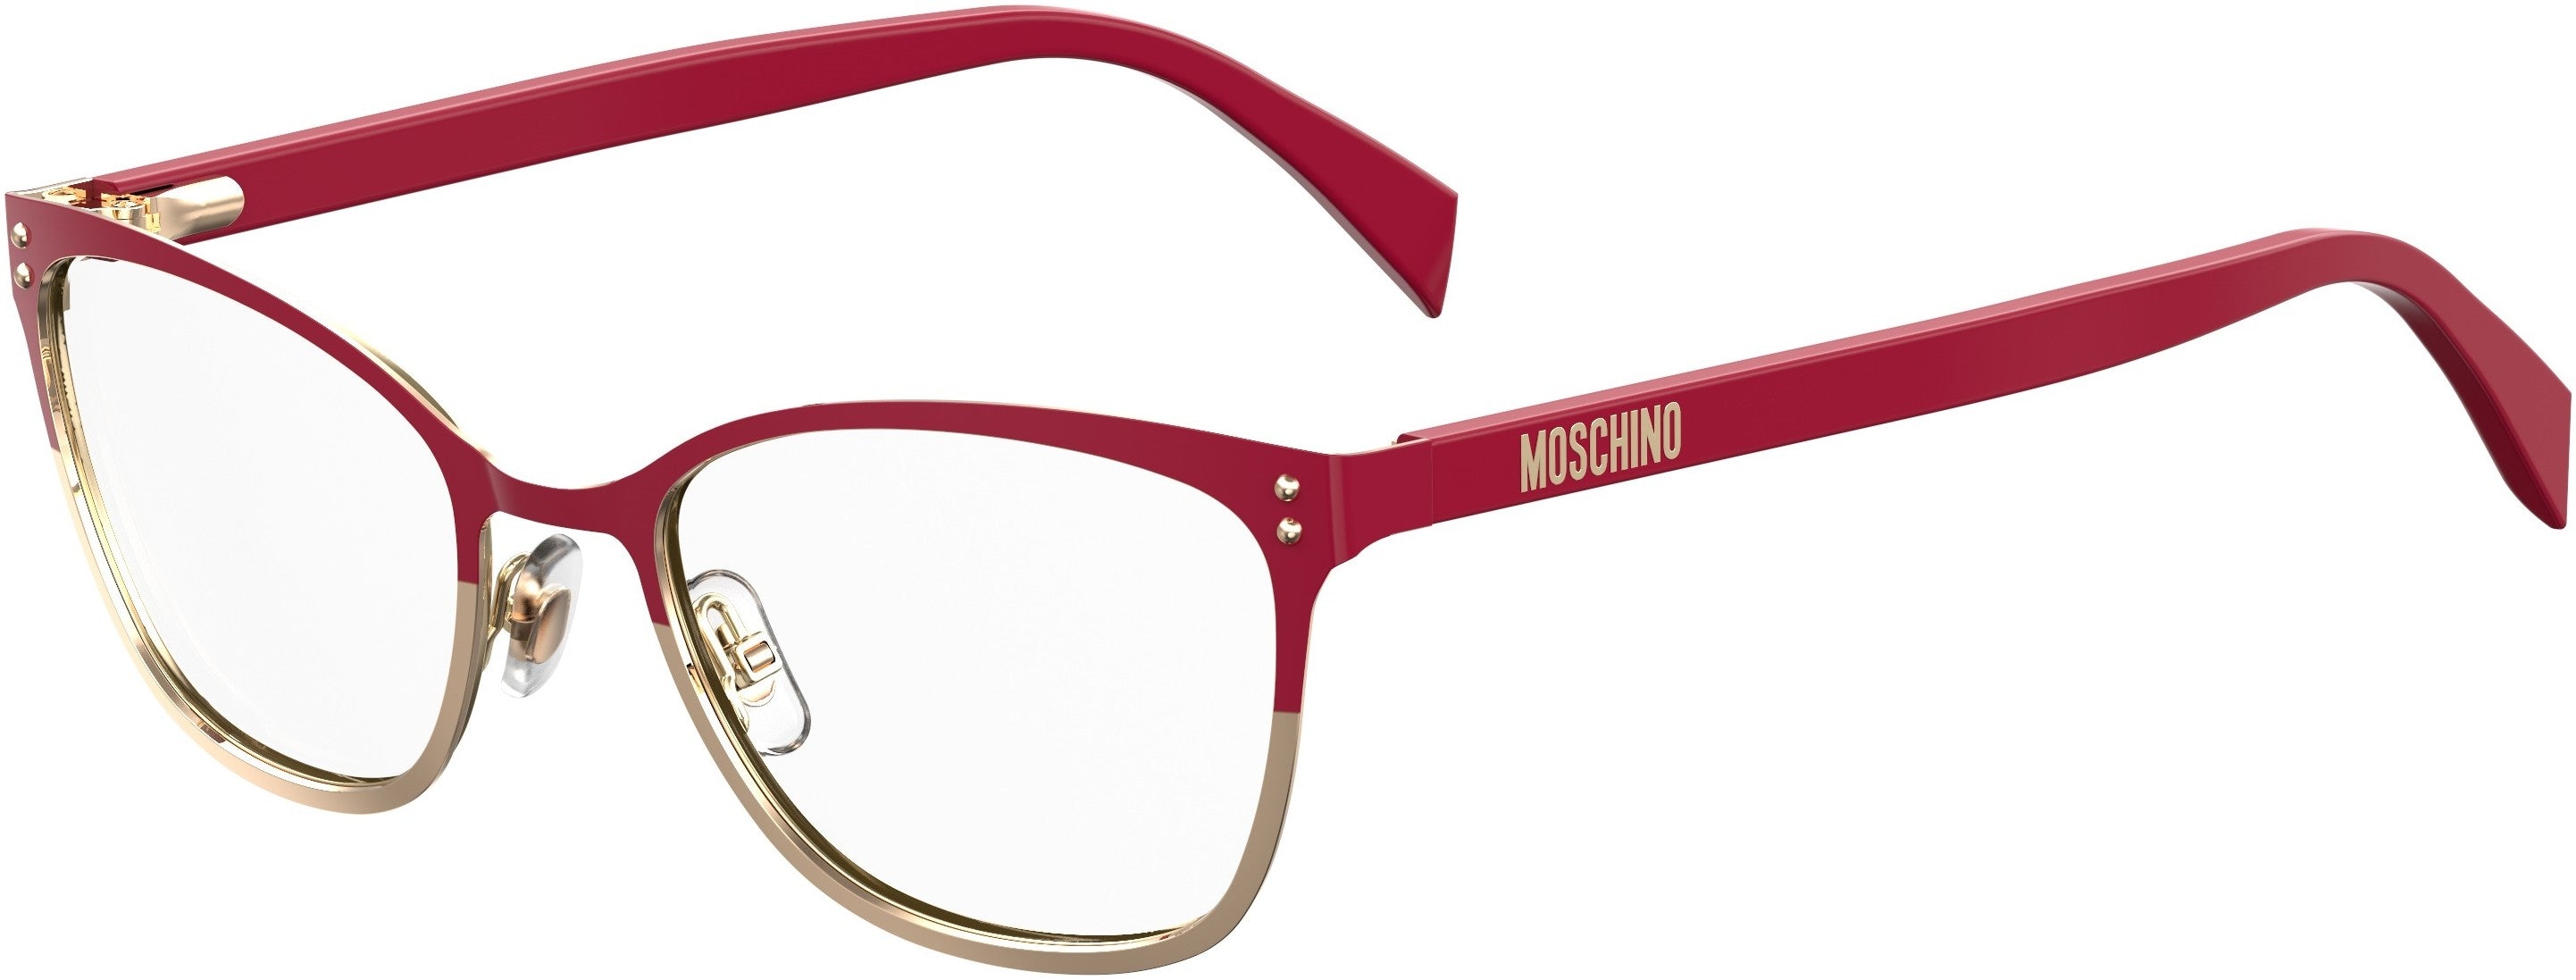  Moschino 511 Square Eyeglasses 08CQ-08CQ  Cherry (00 Demo Lens)